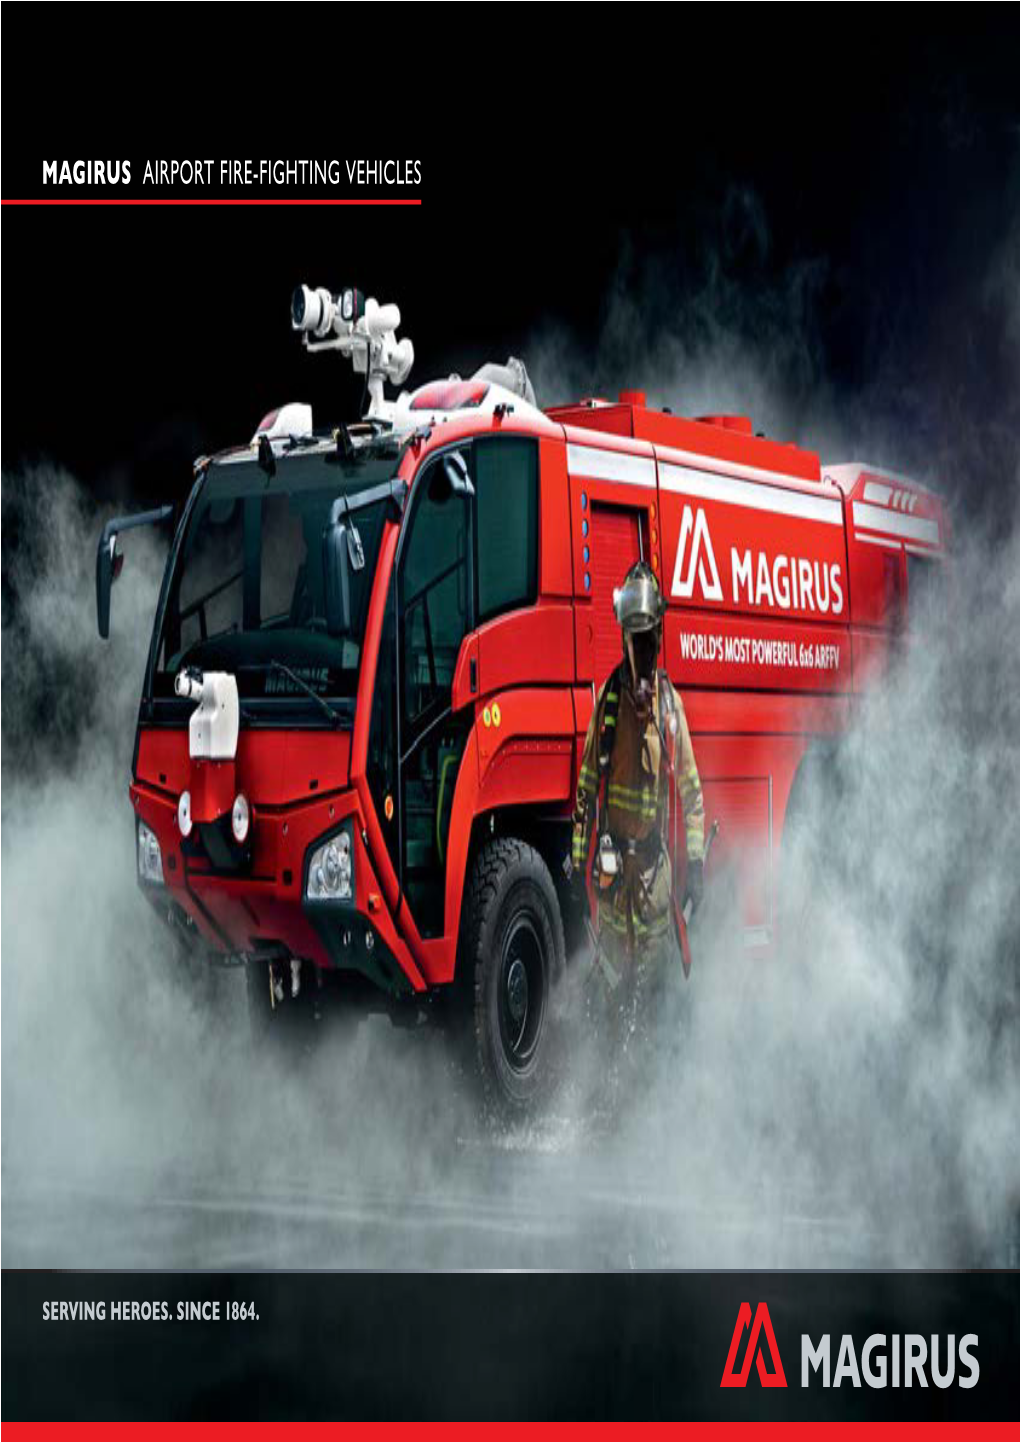 Magirus Airport Fire-Fighting Vehicles